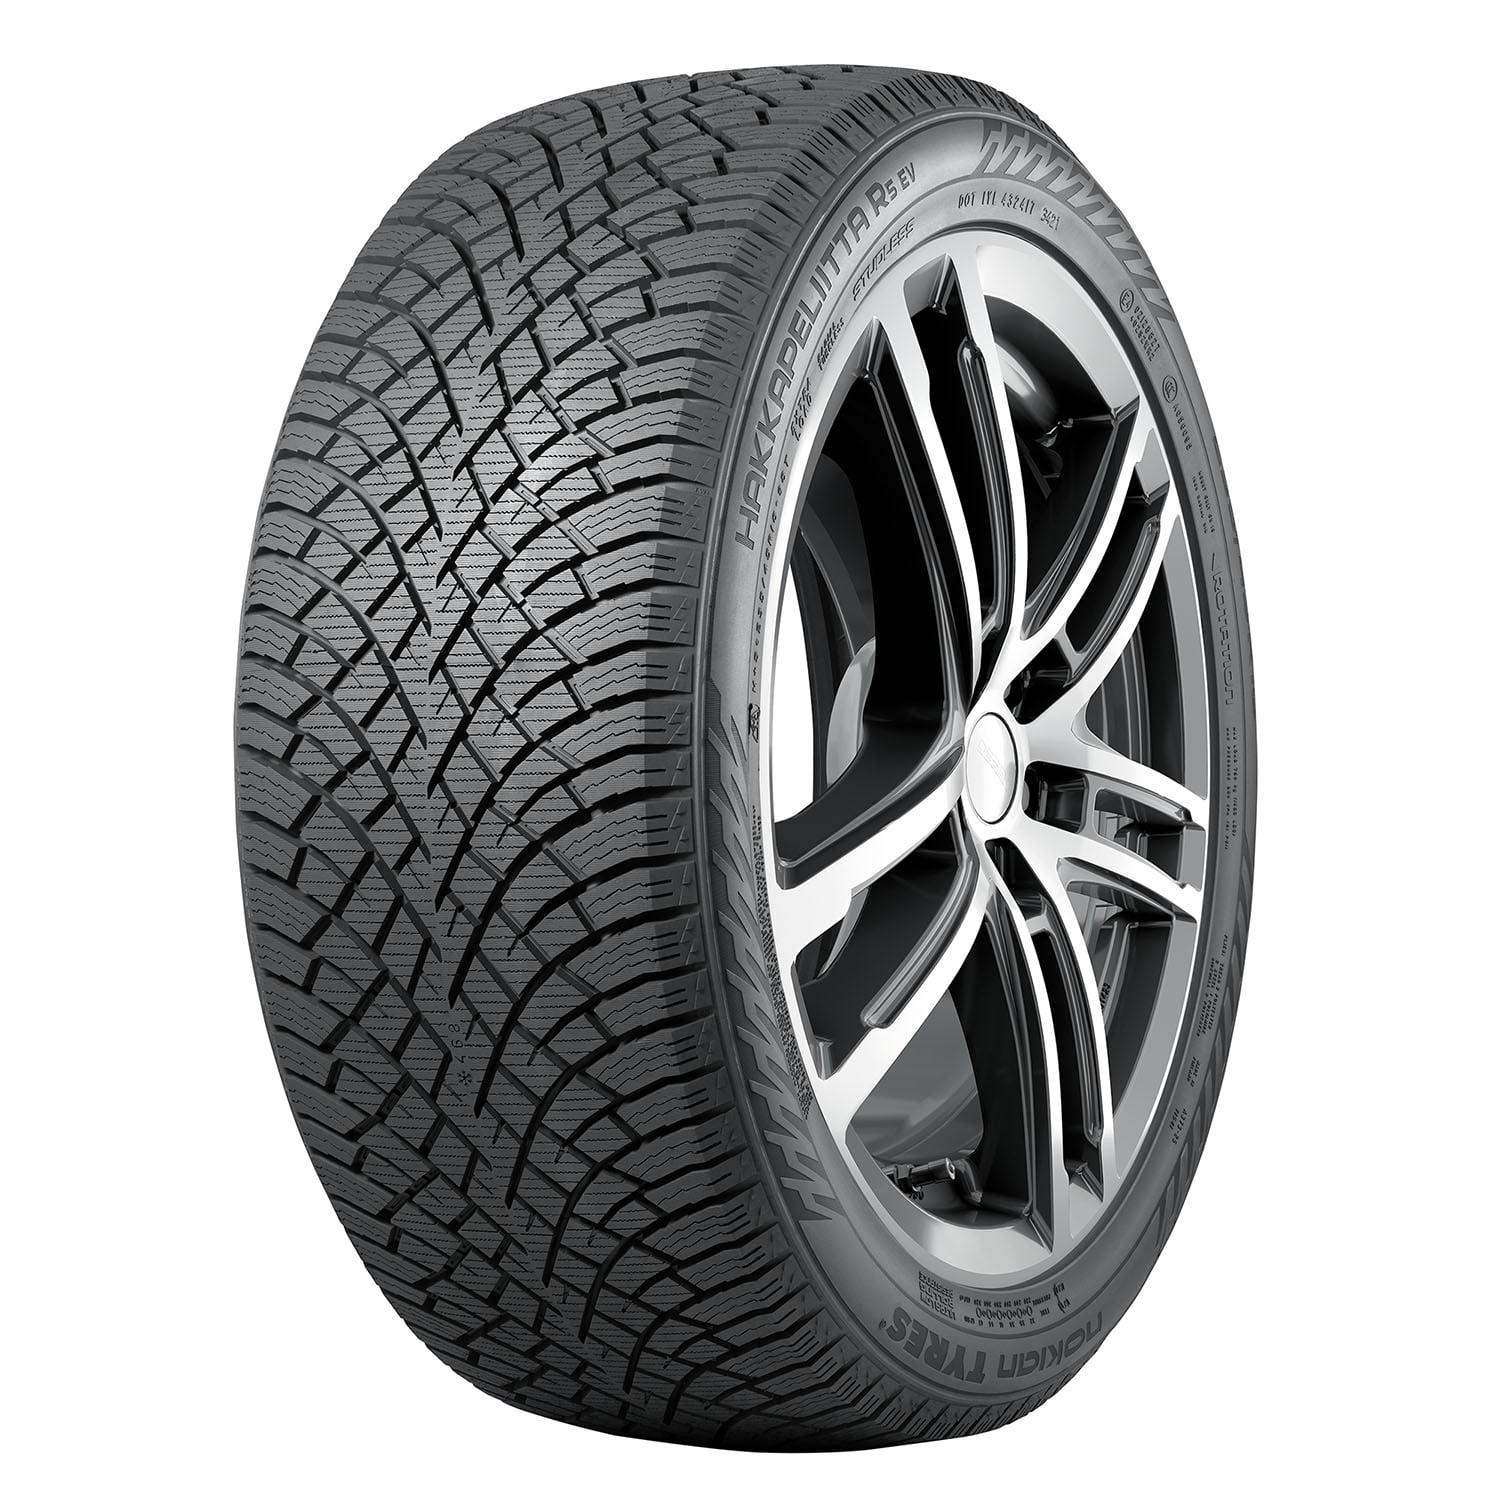 Nokian Hakkapeliitta R5 EV Winter 245/50R19 105R XL Electric Vehicle Tire  Fits: 2023 BMW X4 M40i, 2023 BMW 740i Base